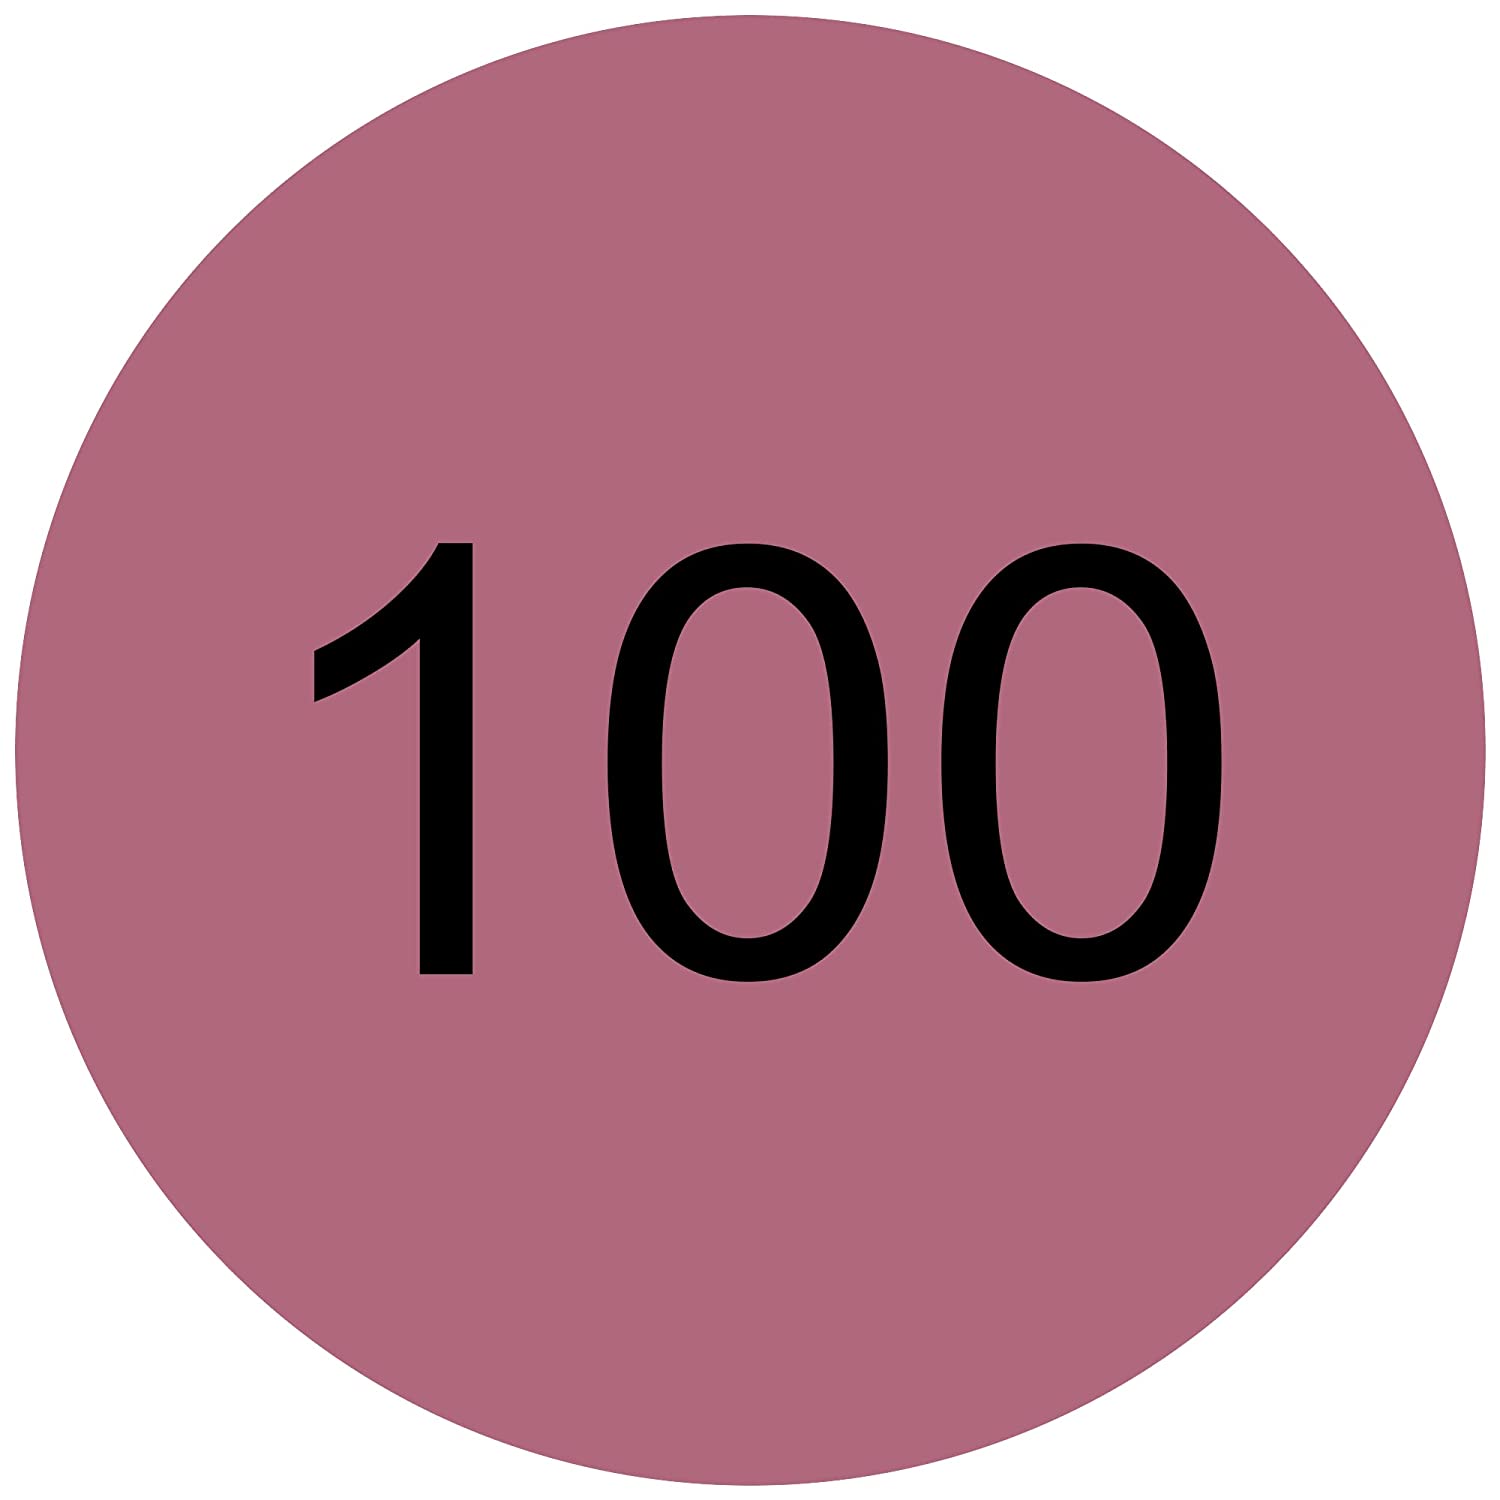 Catrice Demi Matt Lipstick, No. 100 Nude Crush Everyday, Red, Matte, Long-Lasting, Matte, Intense, Colour-Intense, Vegan, Alcohol-Free, Paraben Free (4g)